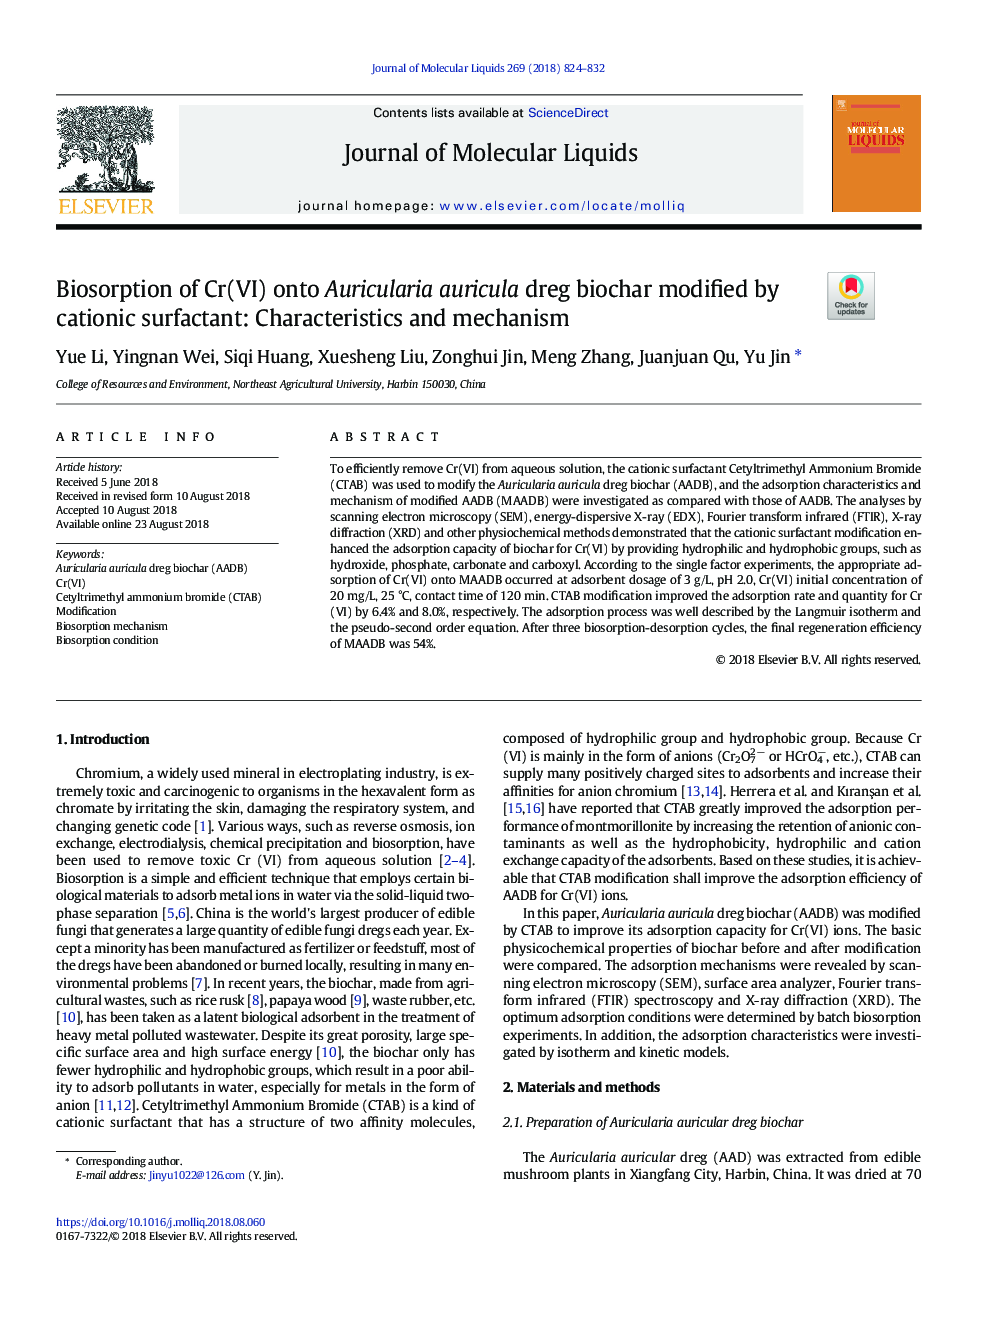 Biosorption of Cr(VI) onto Auricularia auricula dreg biochar modified by cationic surfactant: Characteristics and mechanism